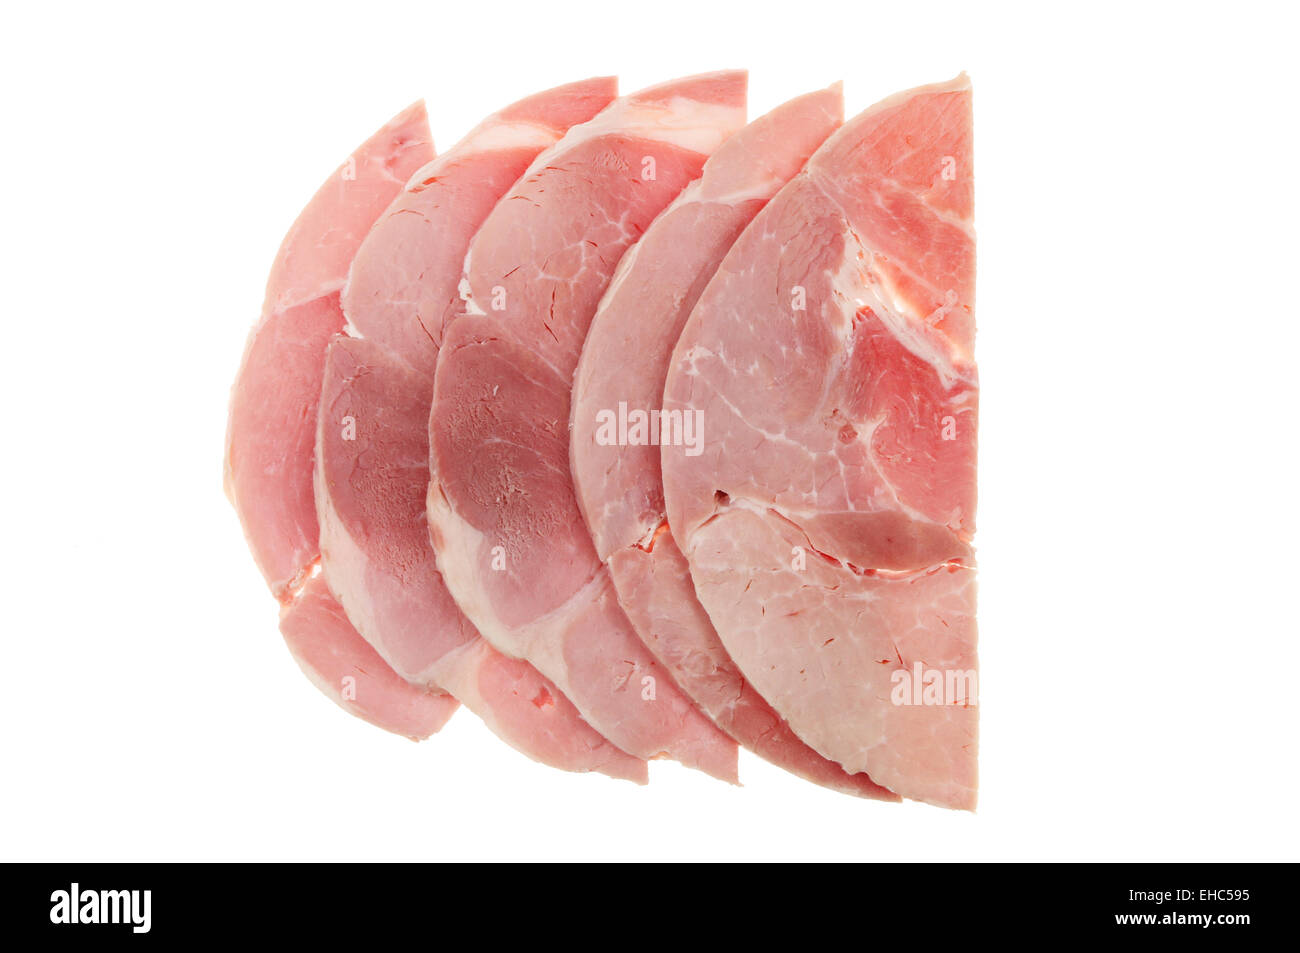 Slices of ham isolated against white Stock Photo